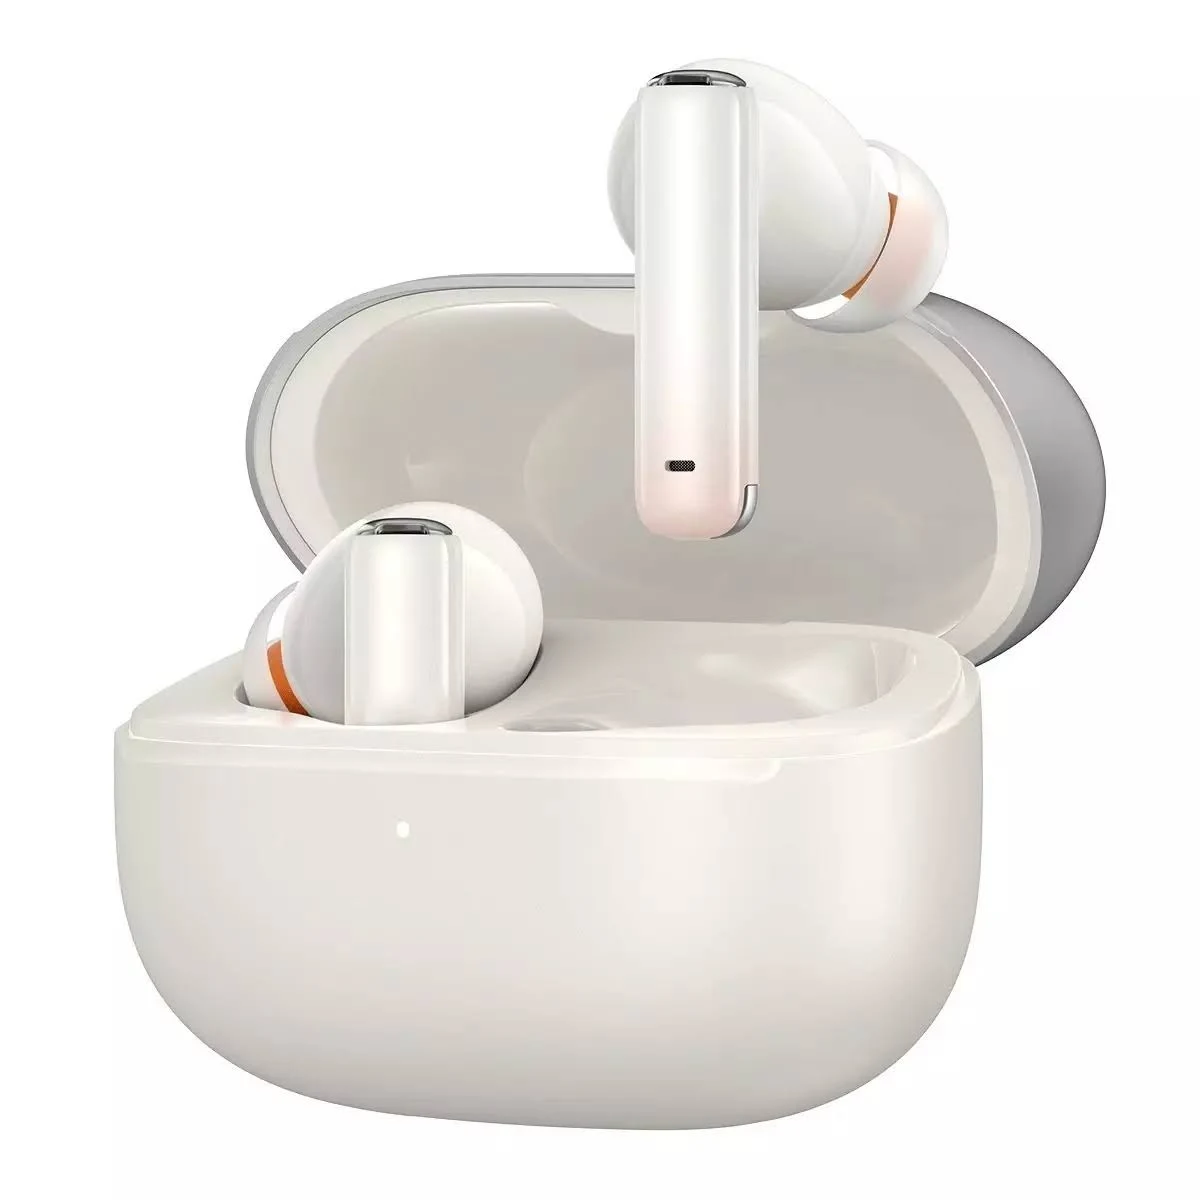 Kopfhörer NGTW140202, In-ear BASEUS Weiß Bluetooth